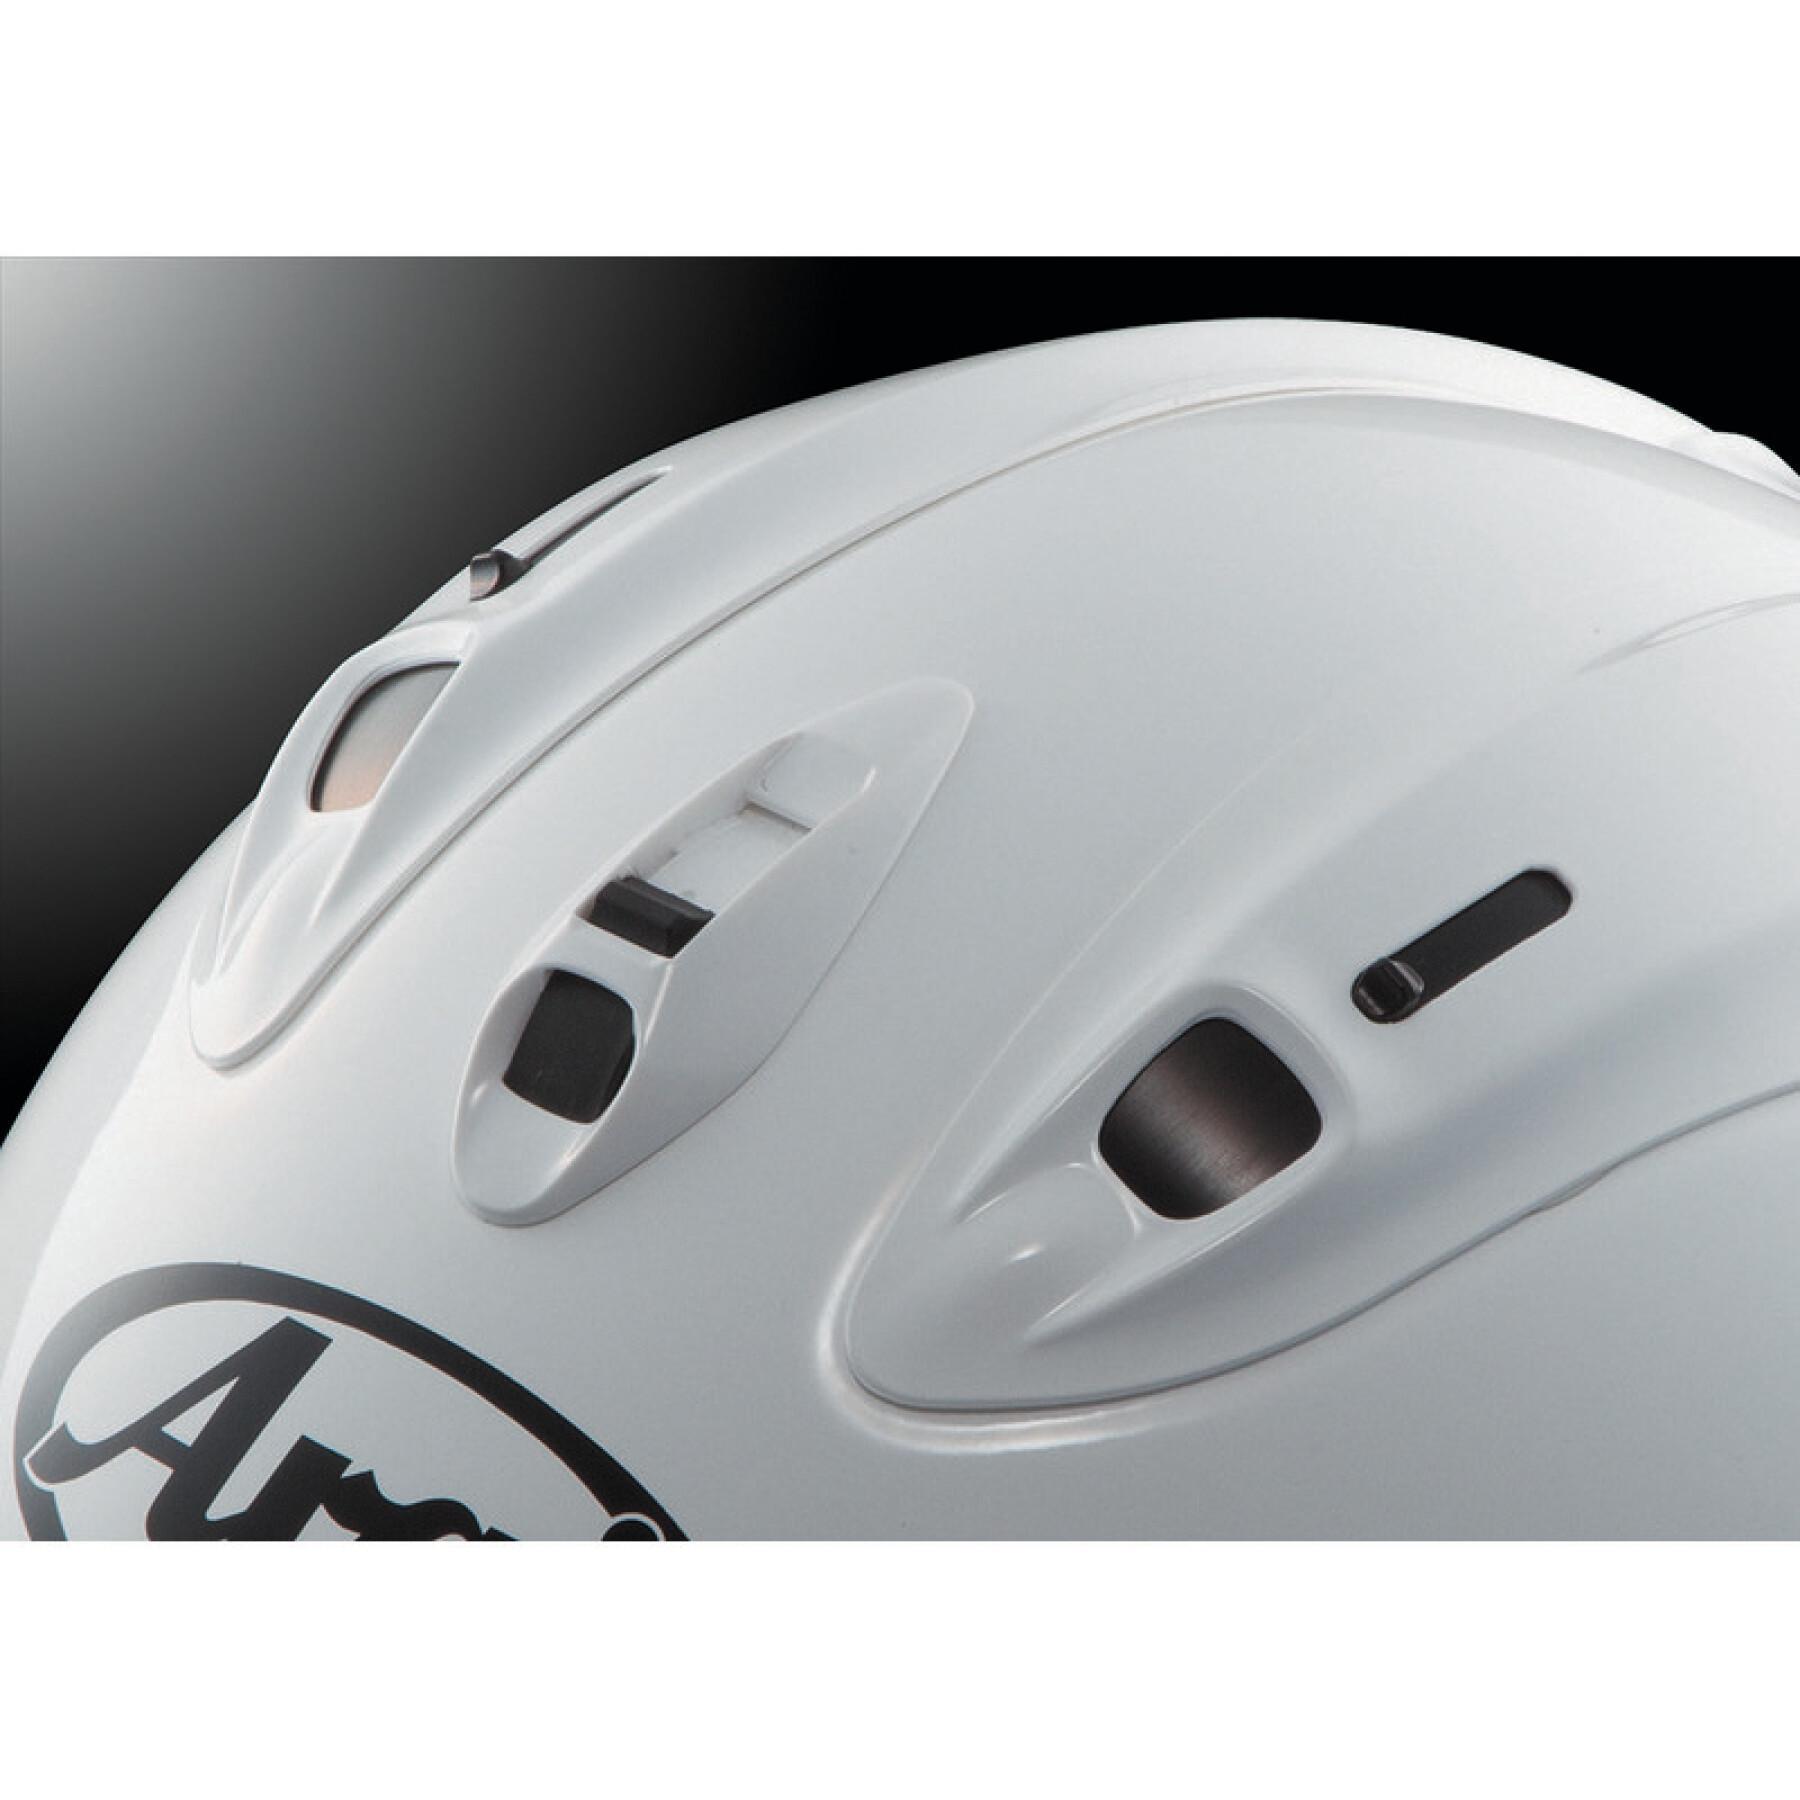 Ventilazione centrale superiore del casco da moto Arai IC-Duct-5 Café Racer SZ-Ram-X